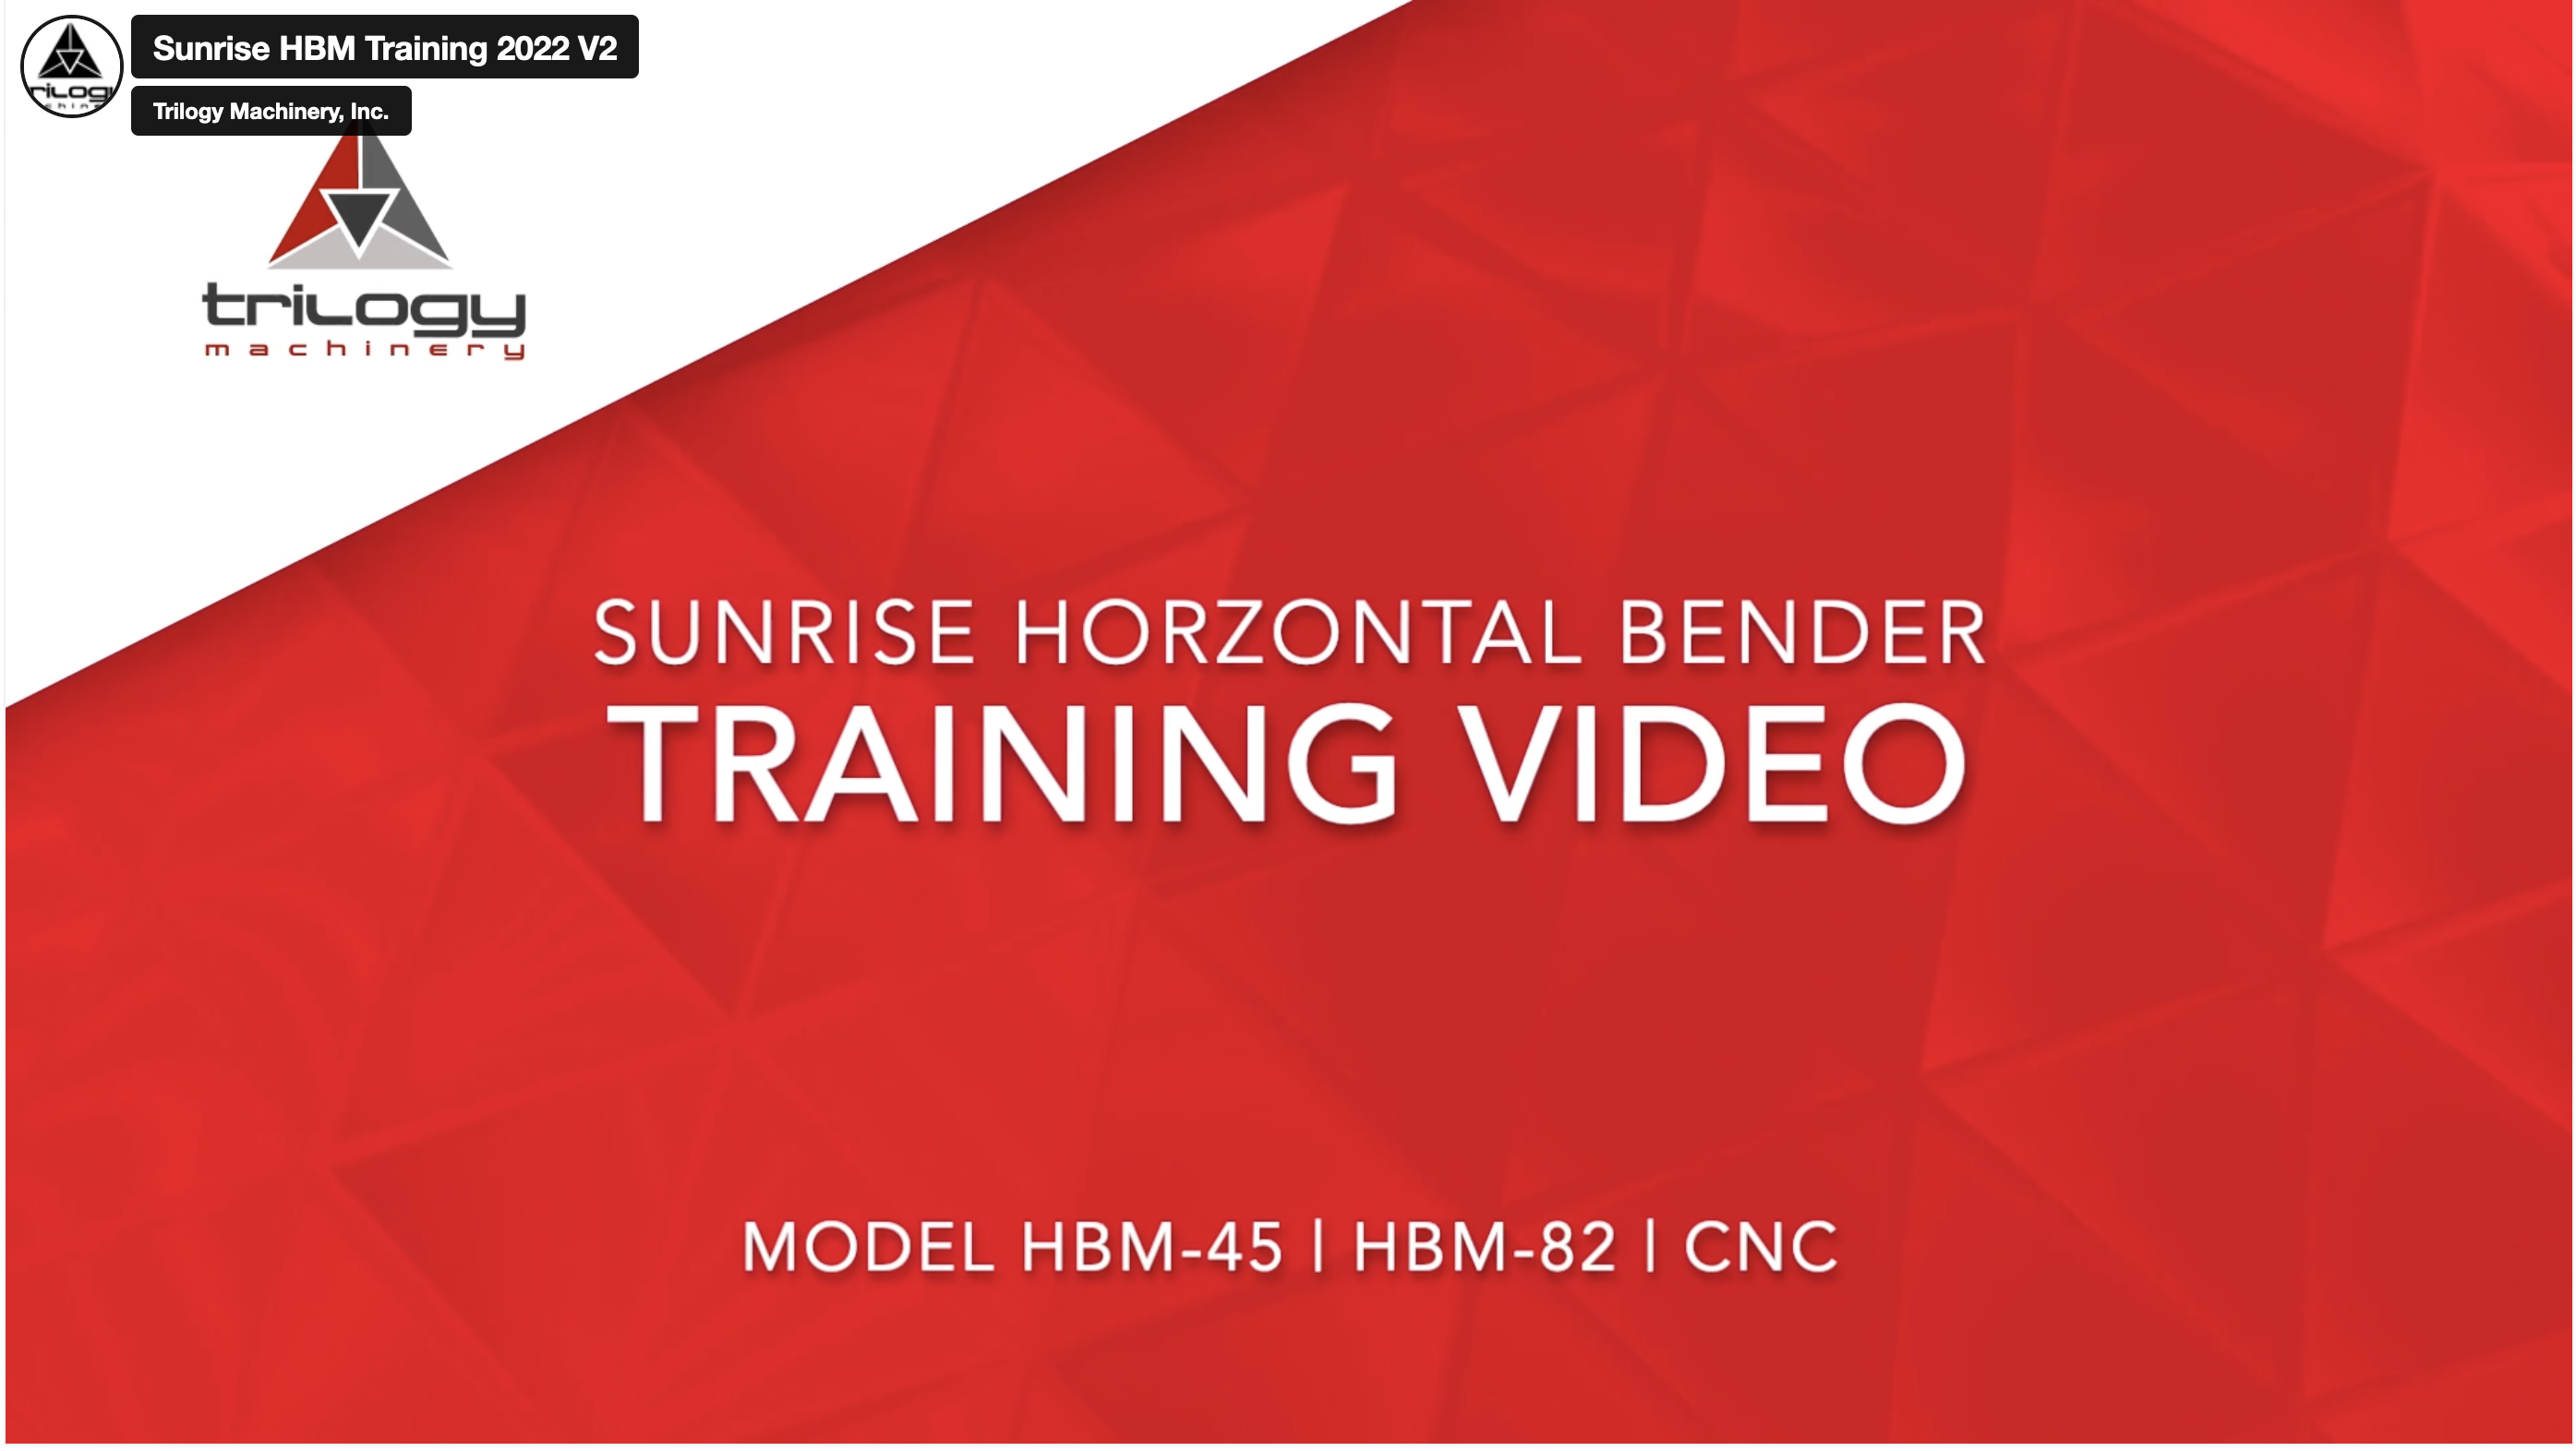 Sunrise HBM Training Video